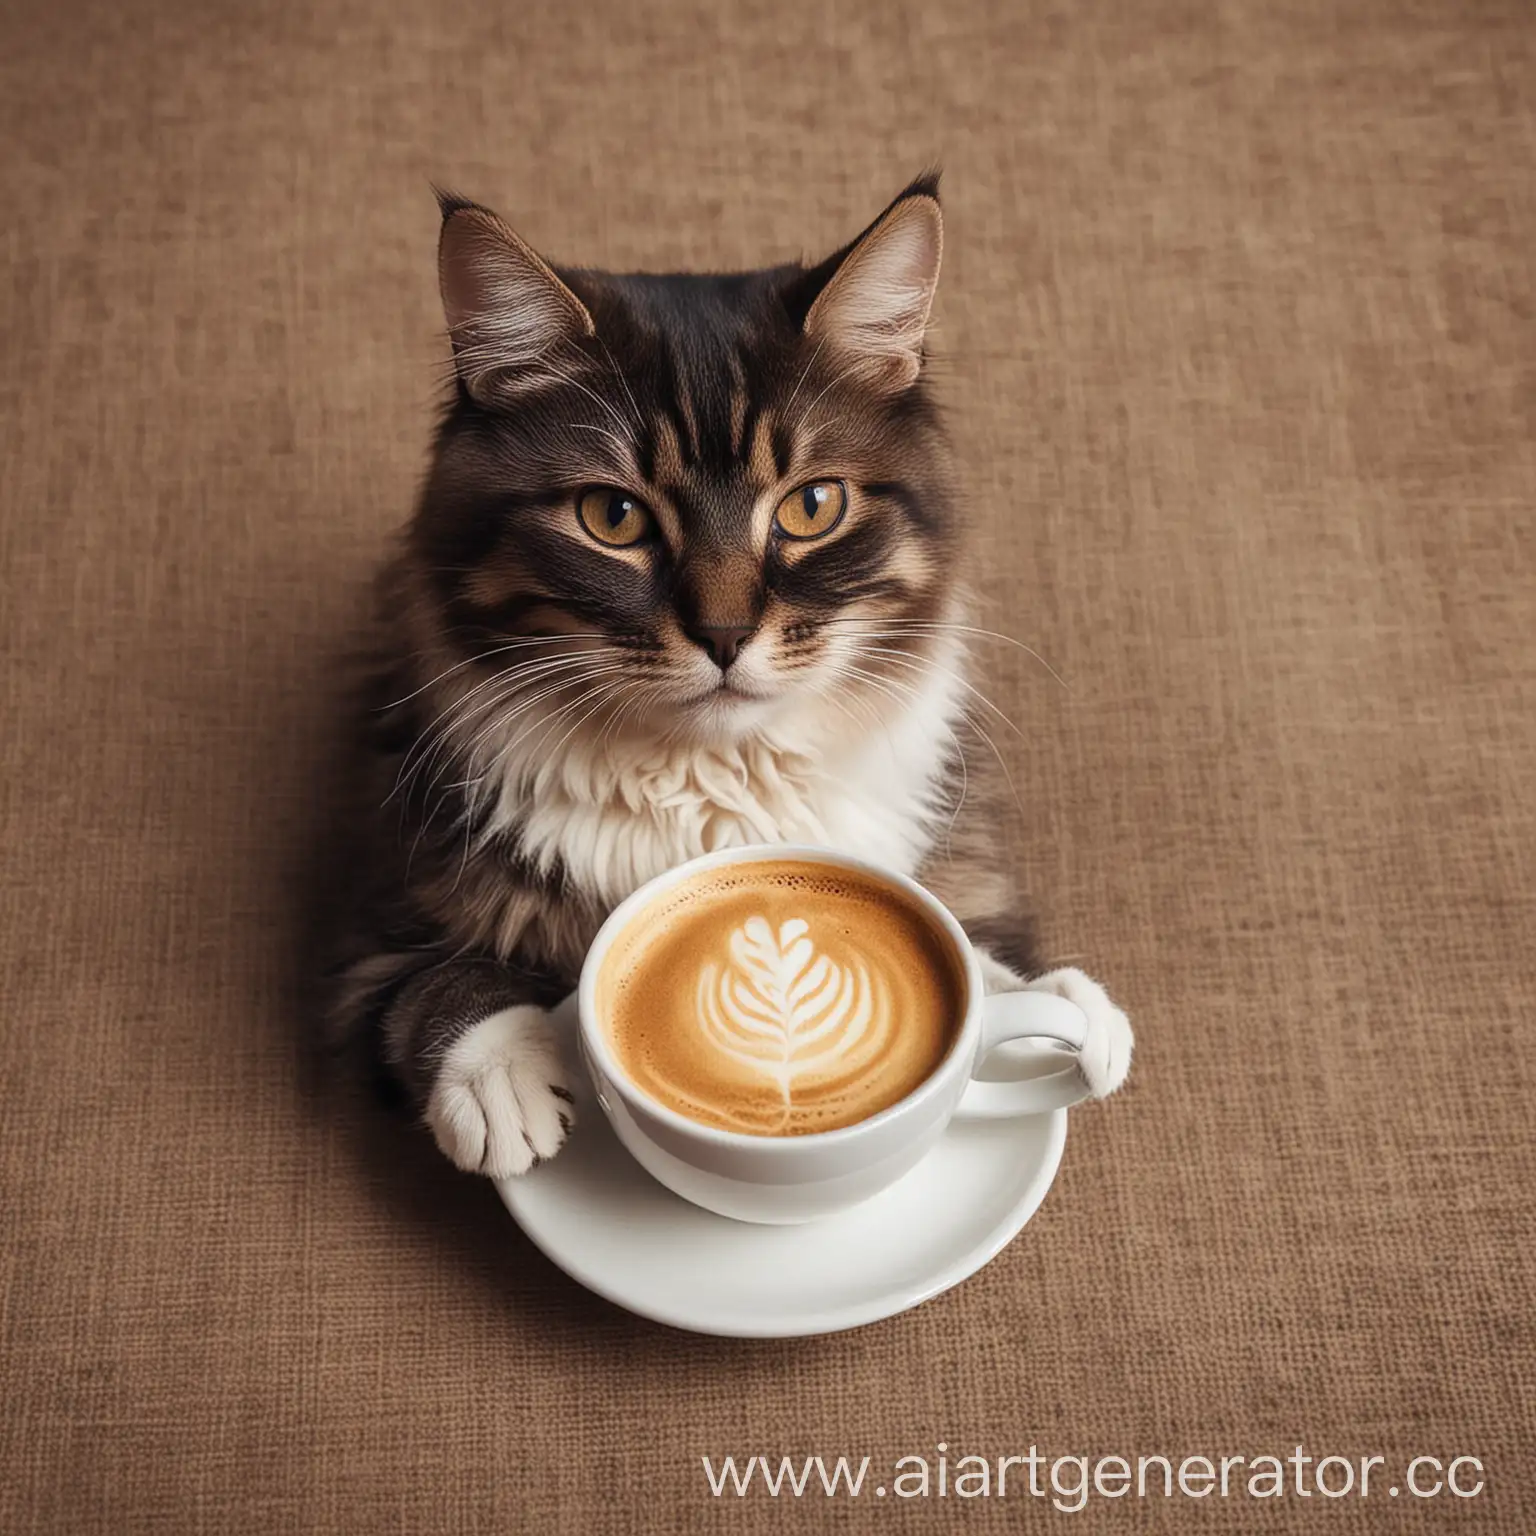 Cat-Enjoying-Morning-Coffee-in-Cozy-Home-Setting